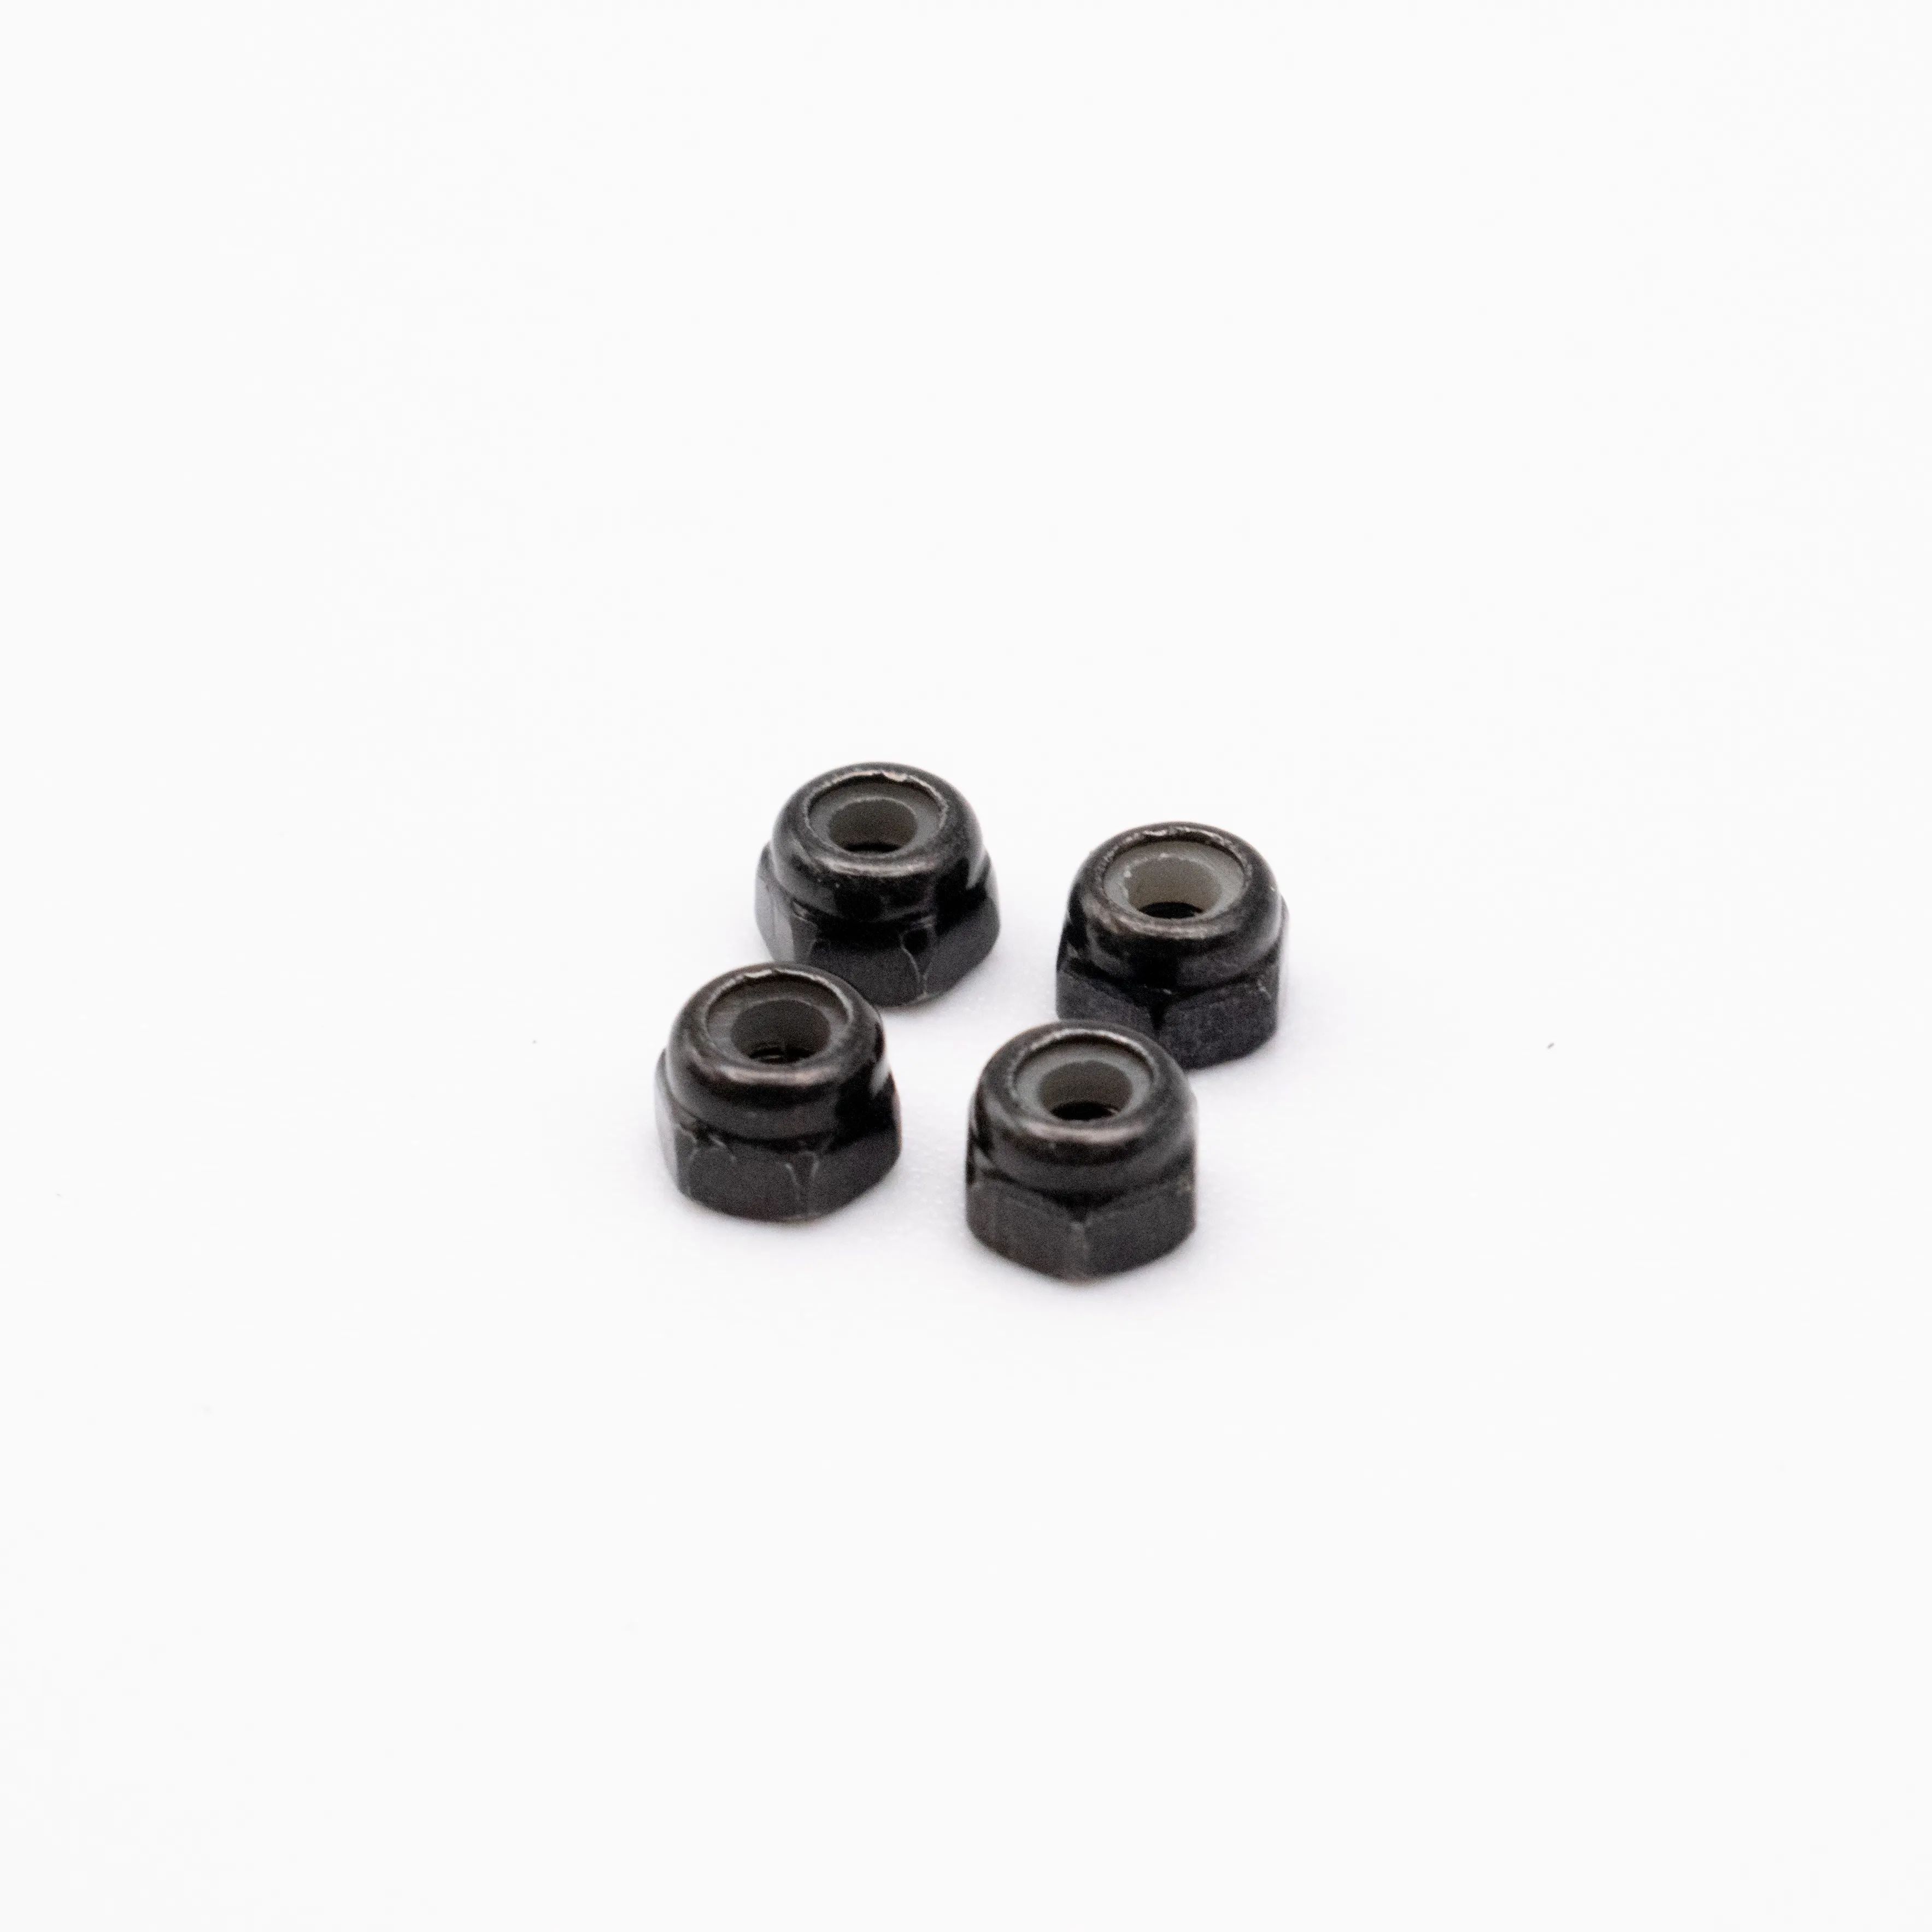 RTRC Black 4mm wheel nuts set (4pcs) – RT106